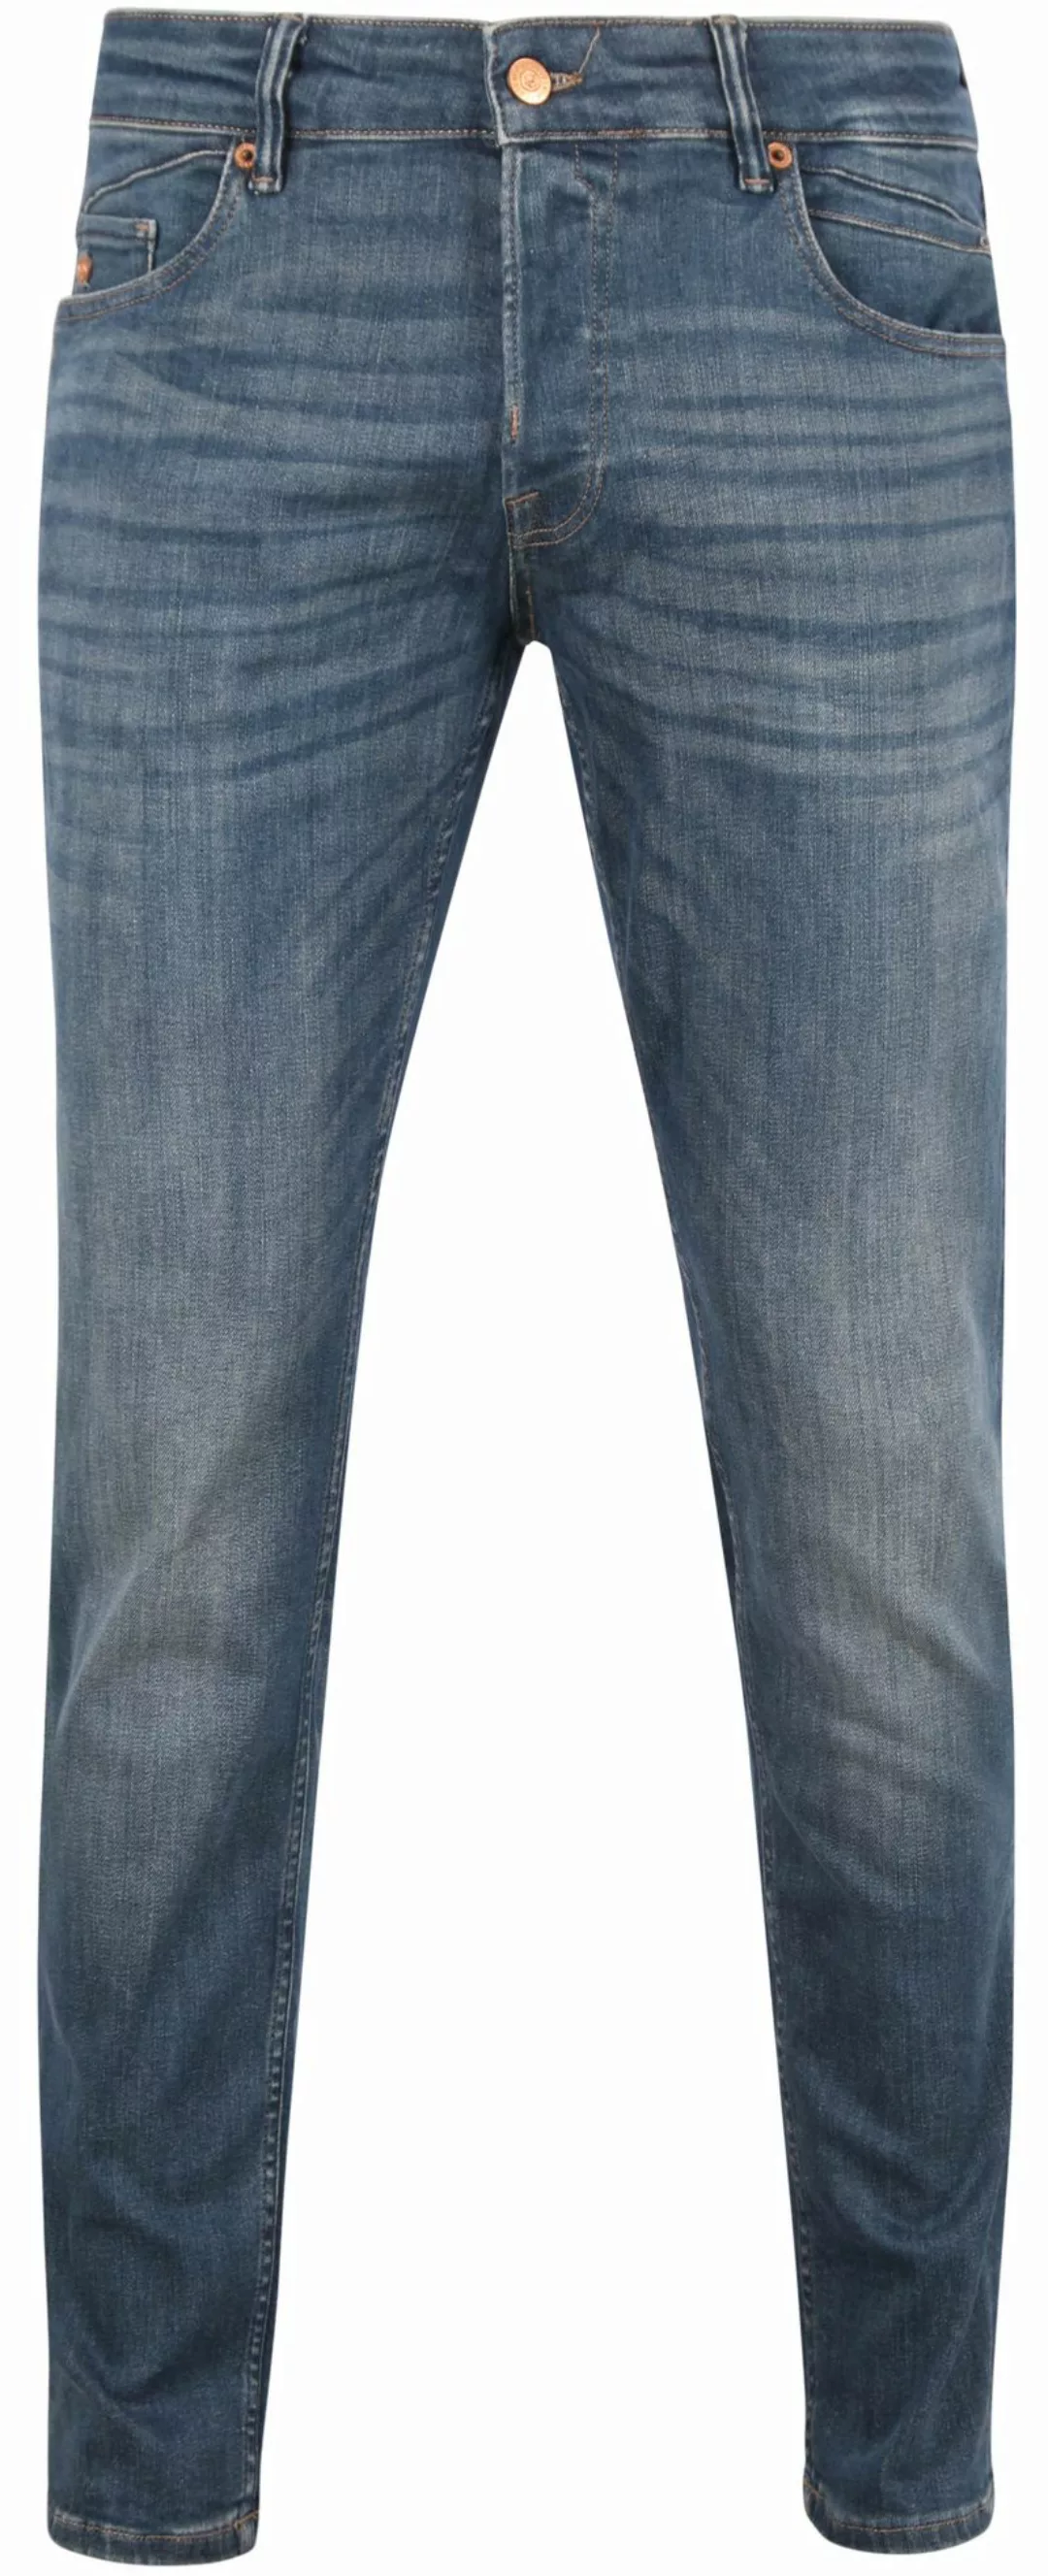 Cast Iron Shiftback Jeans Blau NBD - Größe W 31 - L 32 günstig online kaufen